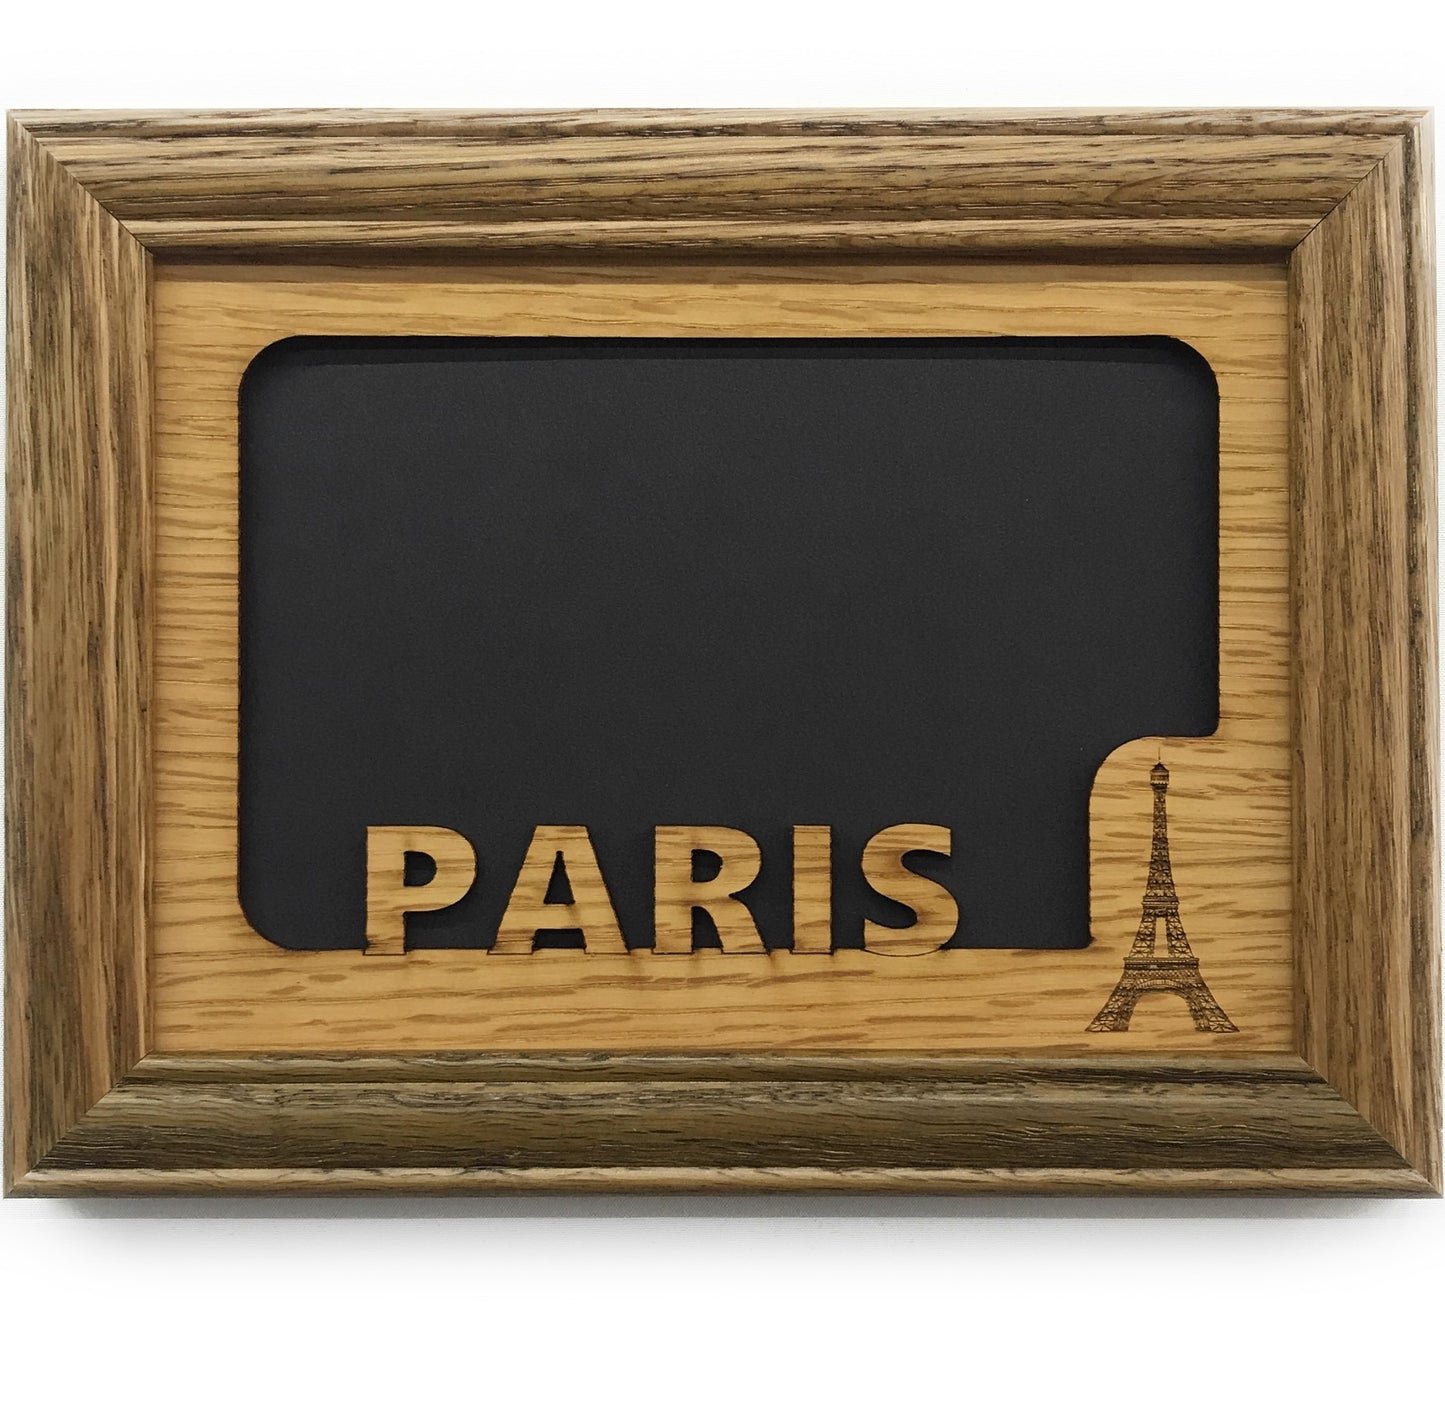 Paris Picture Frame